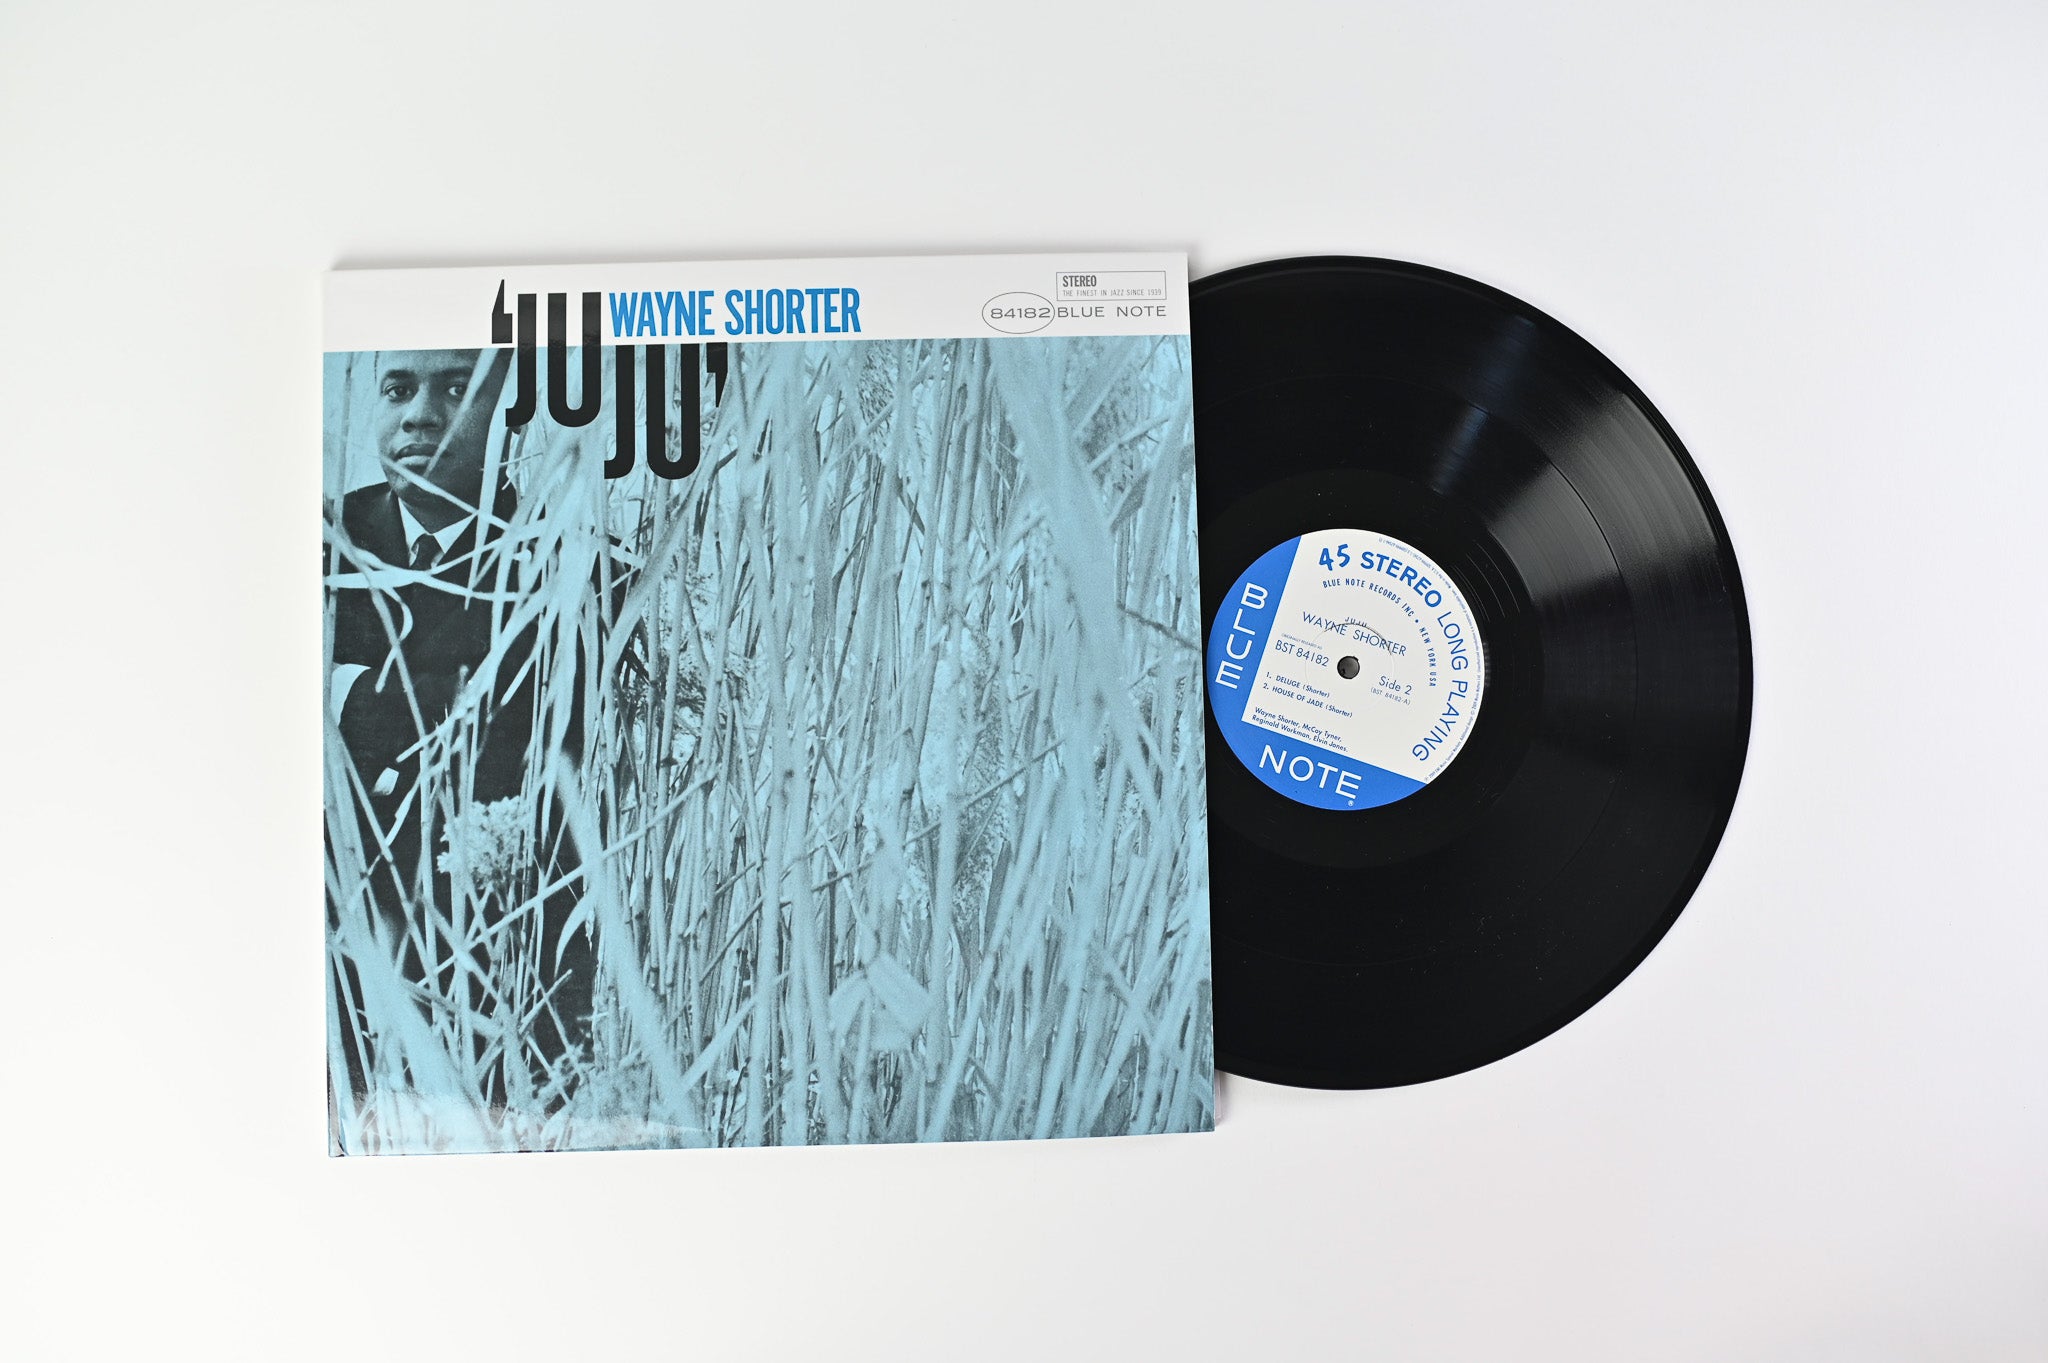 Wayne Shorter - Juju on Blue Note Music Matters Ltd Reissue 45 RPM